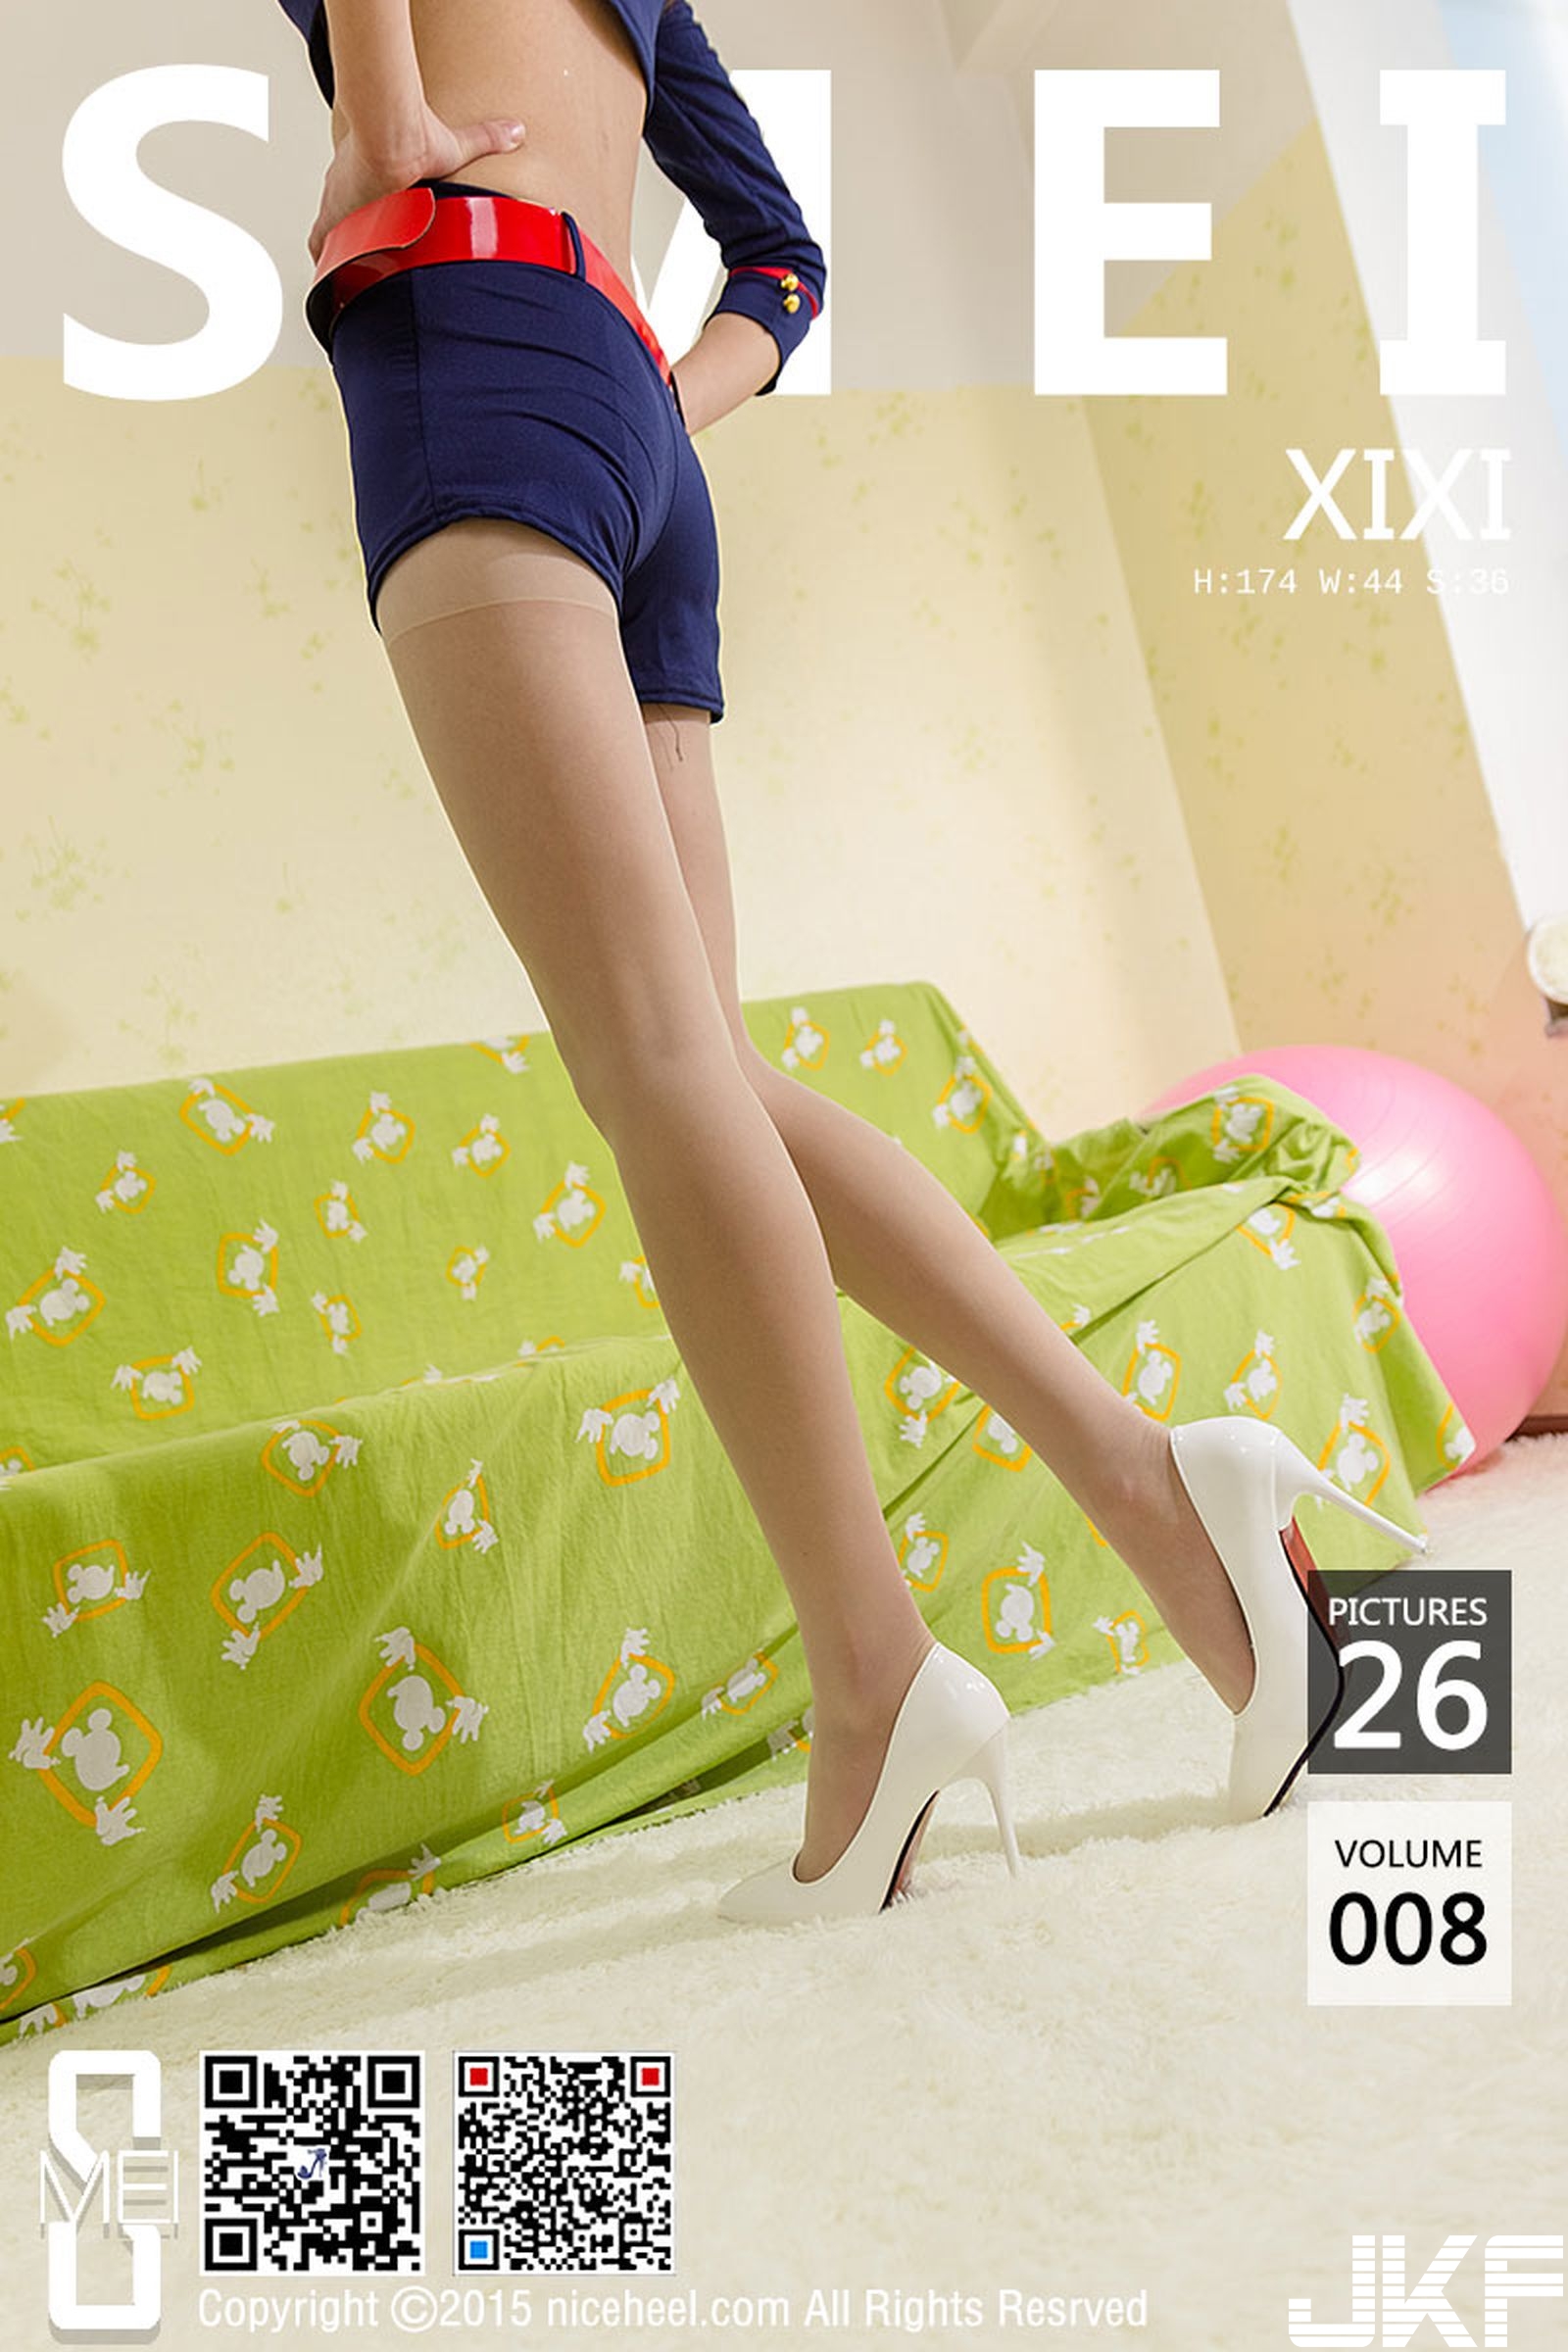 【SMEI秀美系列】NO.008 XIXI 肉絲高跟美腿 【27P】 - 貼圖 - 絲襪美腿 -